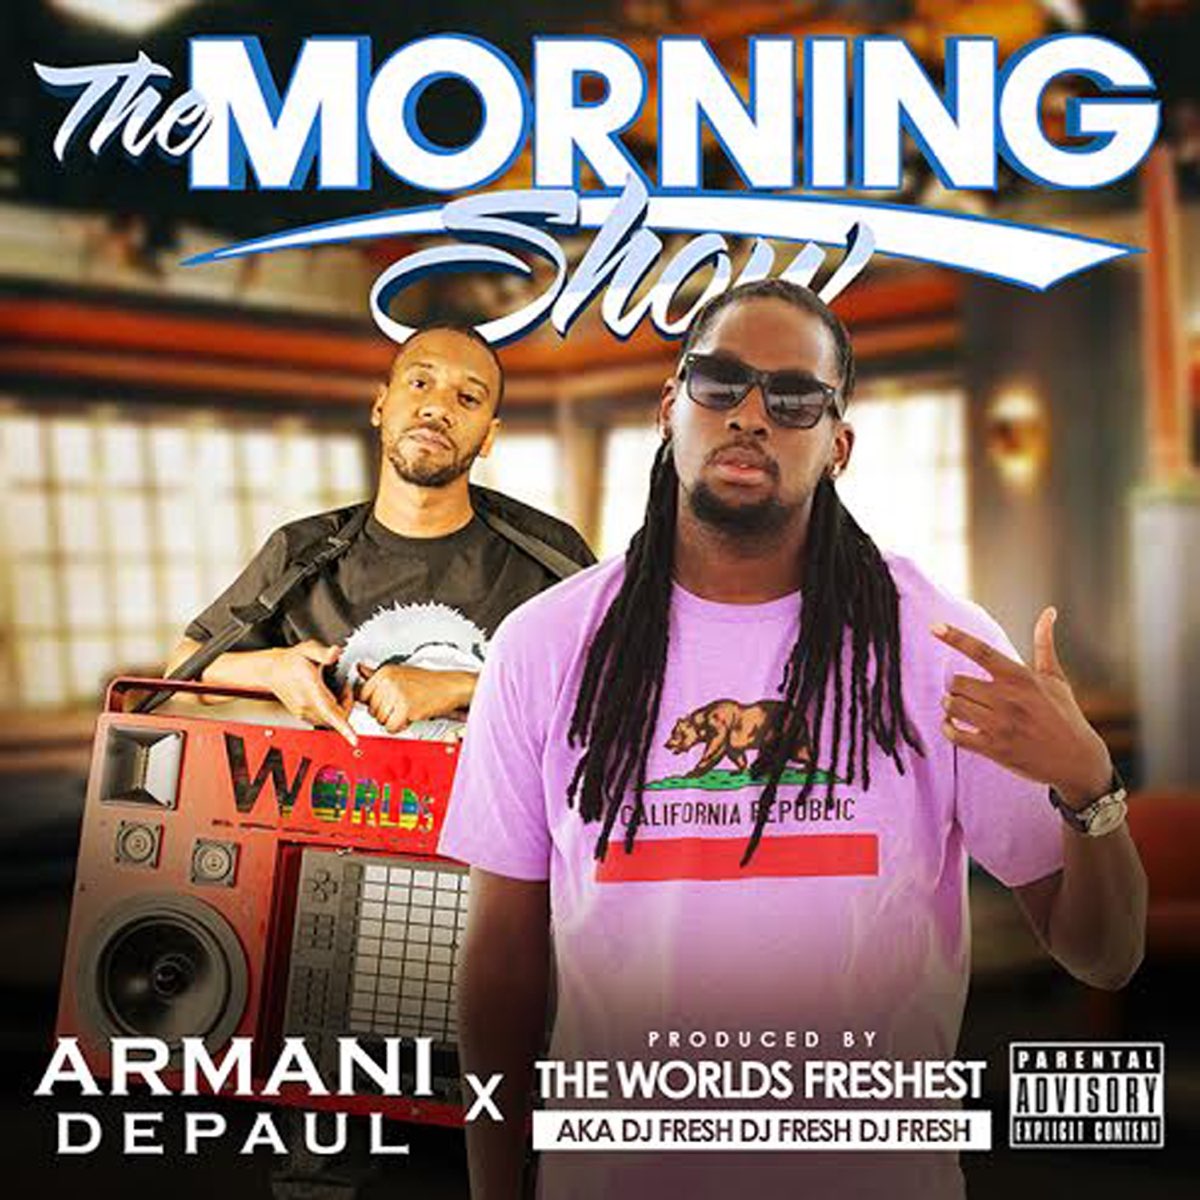 Armani DePaul - The Morning Show